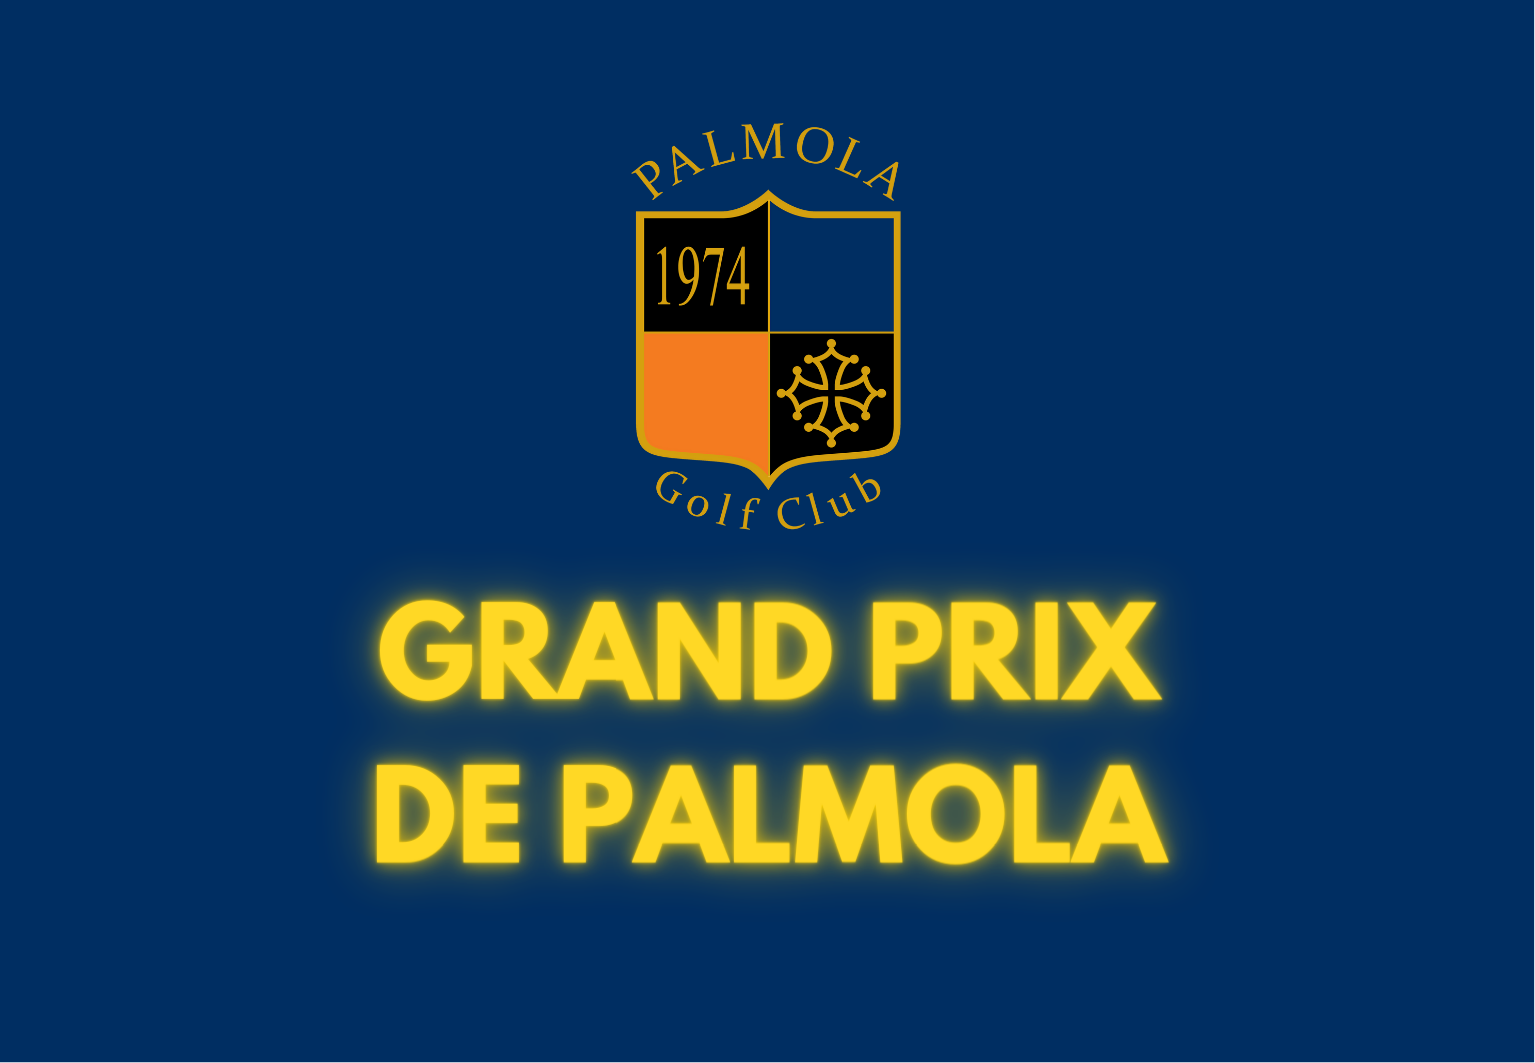 GRAND PRIX DE PALMOLA